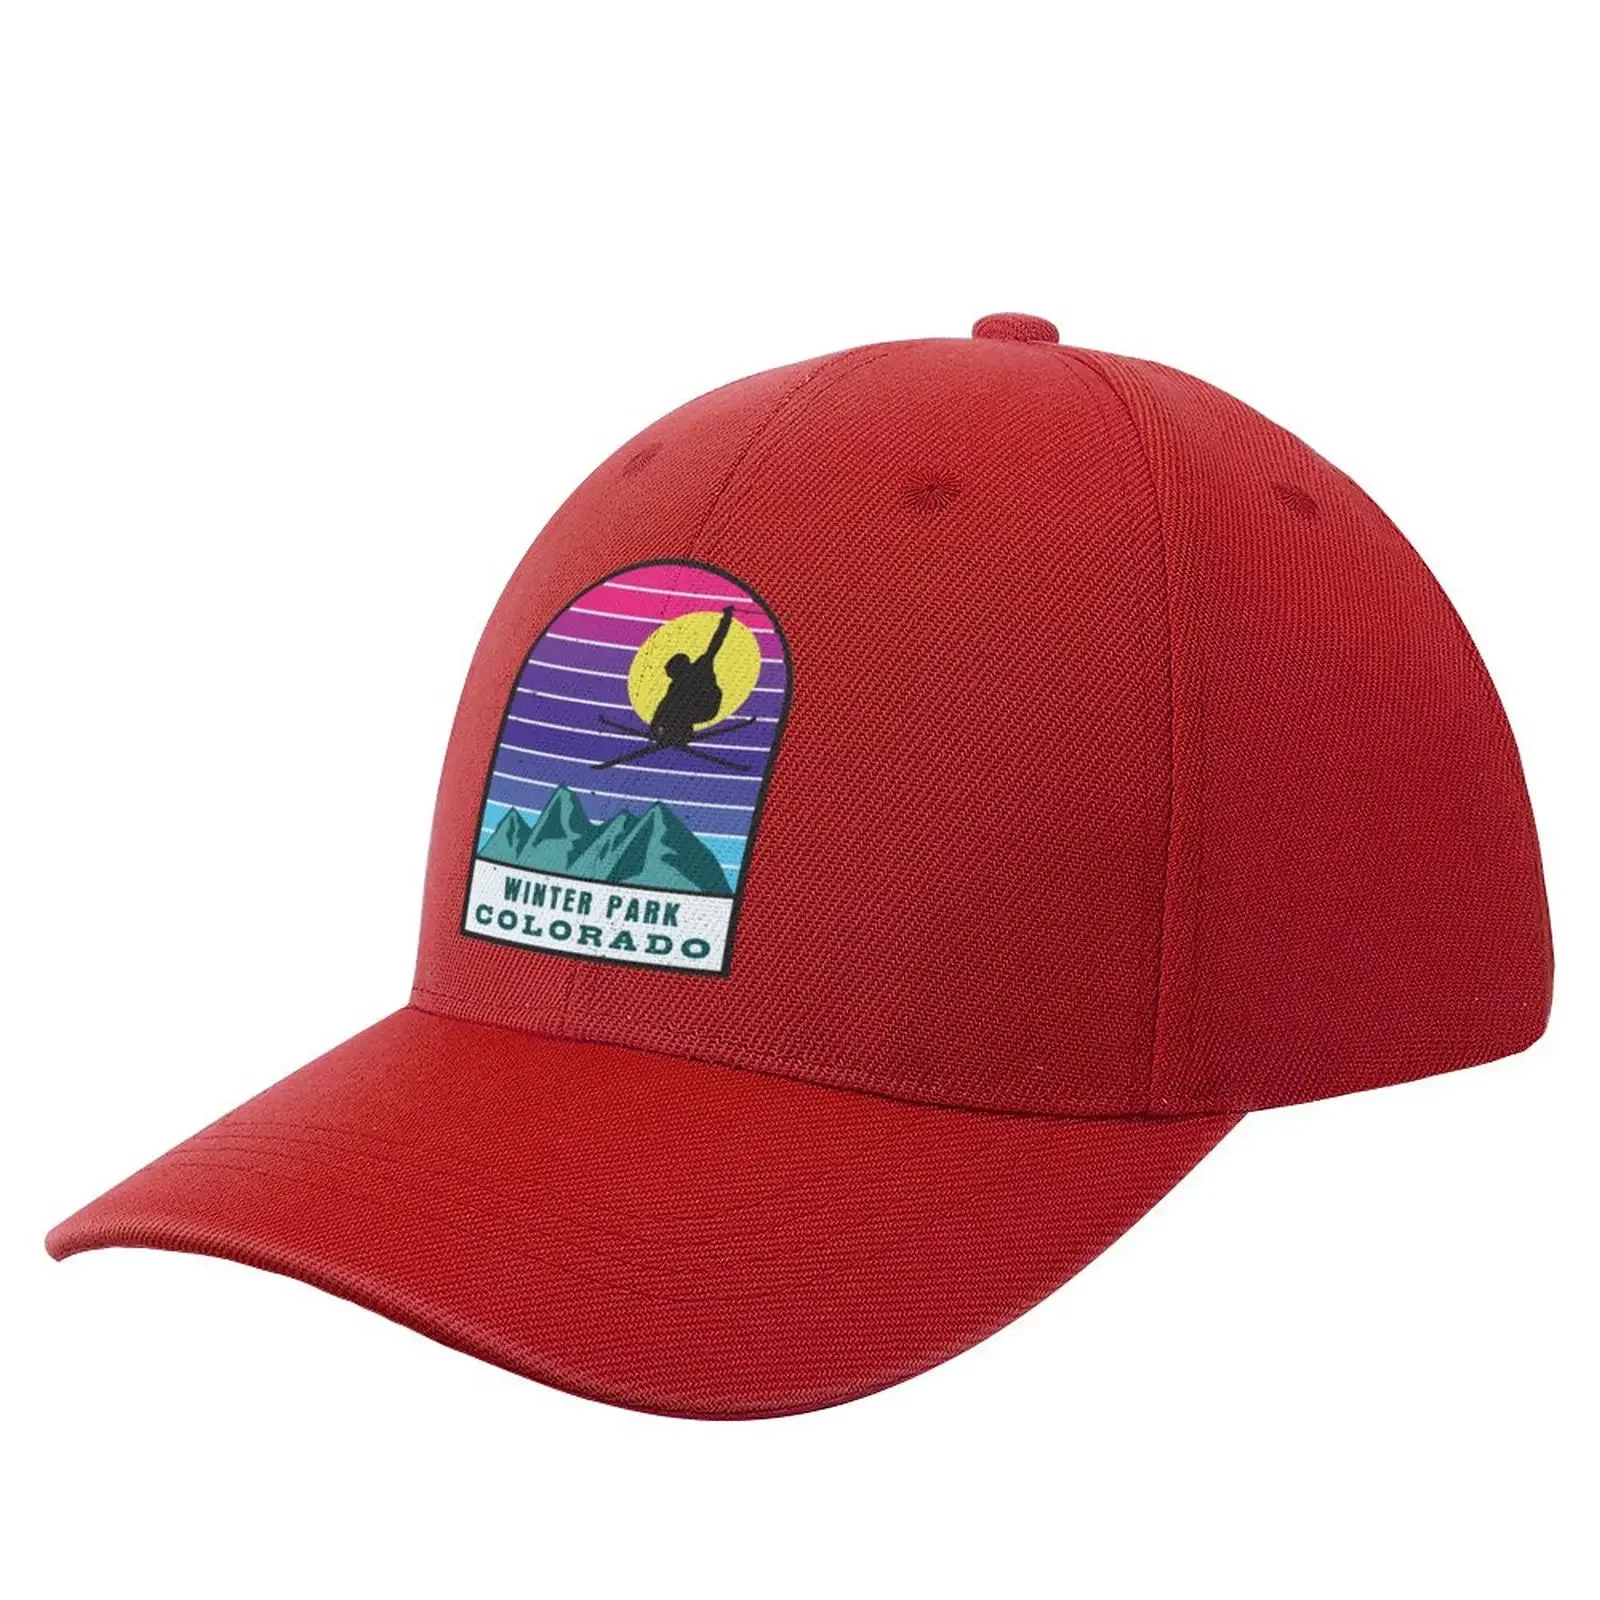 

Ski Winter Park Colorado Retro Sunset Baseball Cap Trucker Cap fashionable Trucker Hats Cap For Women Men'S